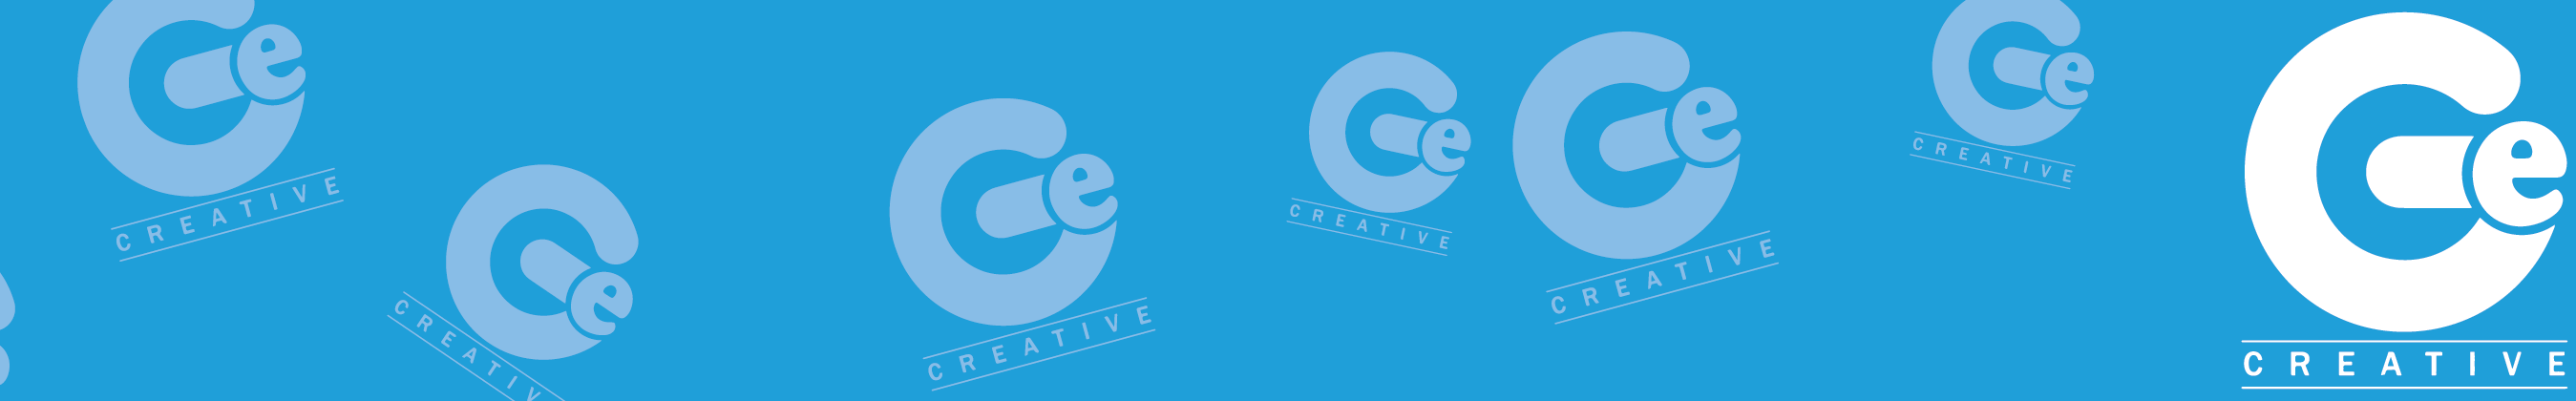 Banner profilu uživatele Ge Creative